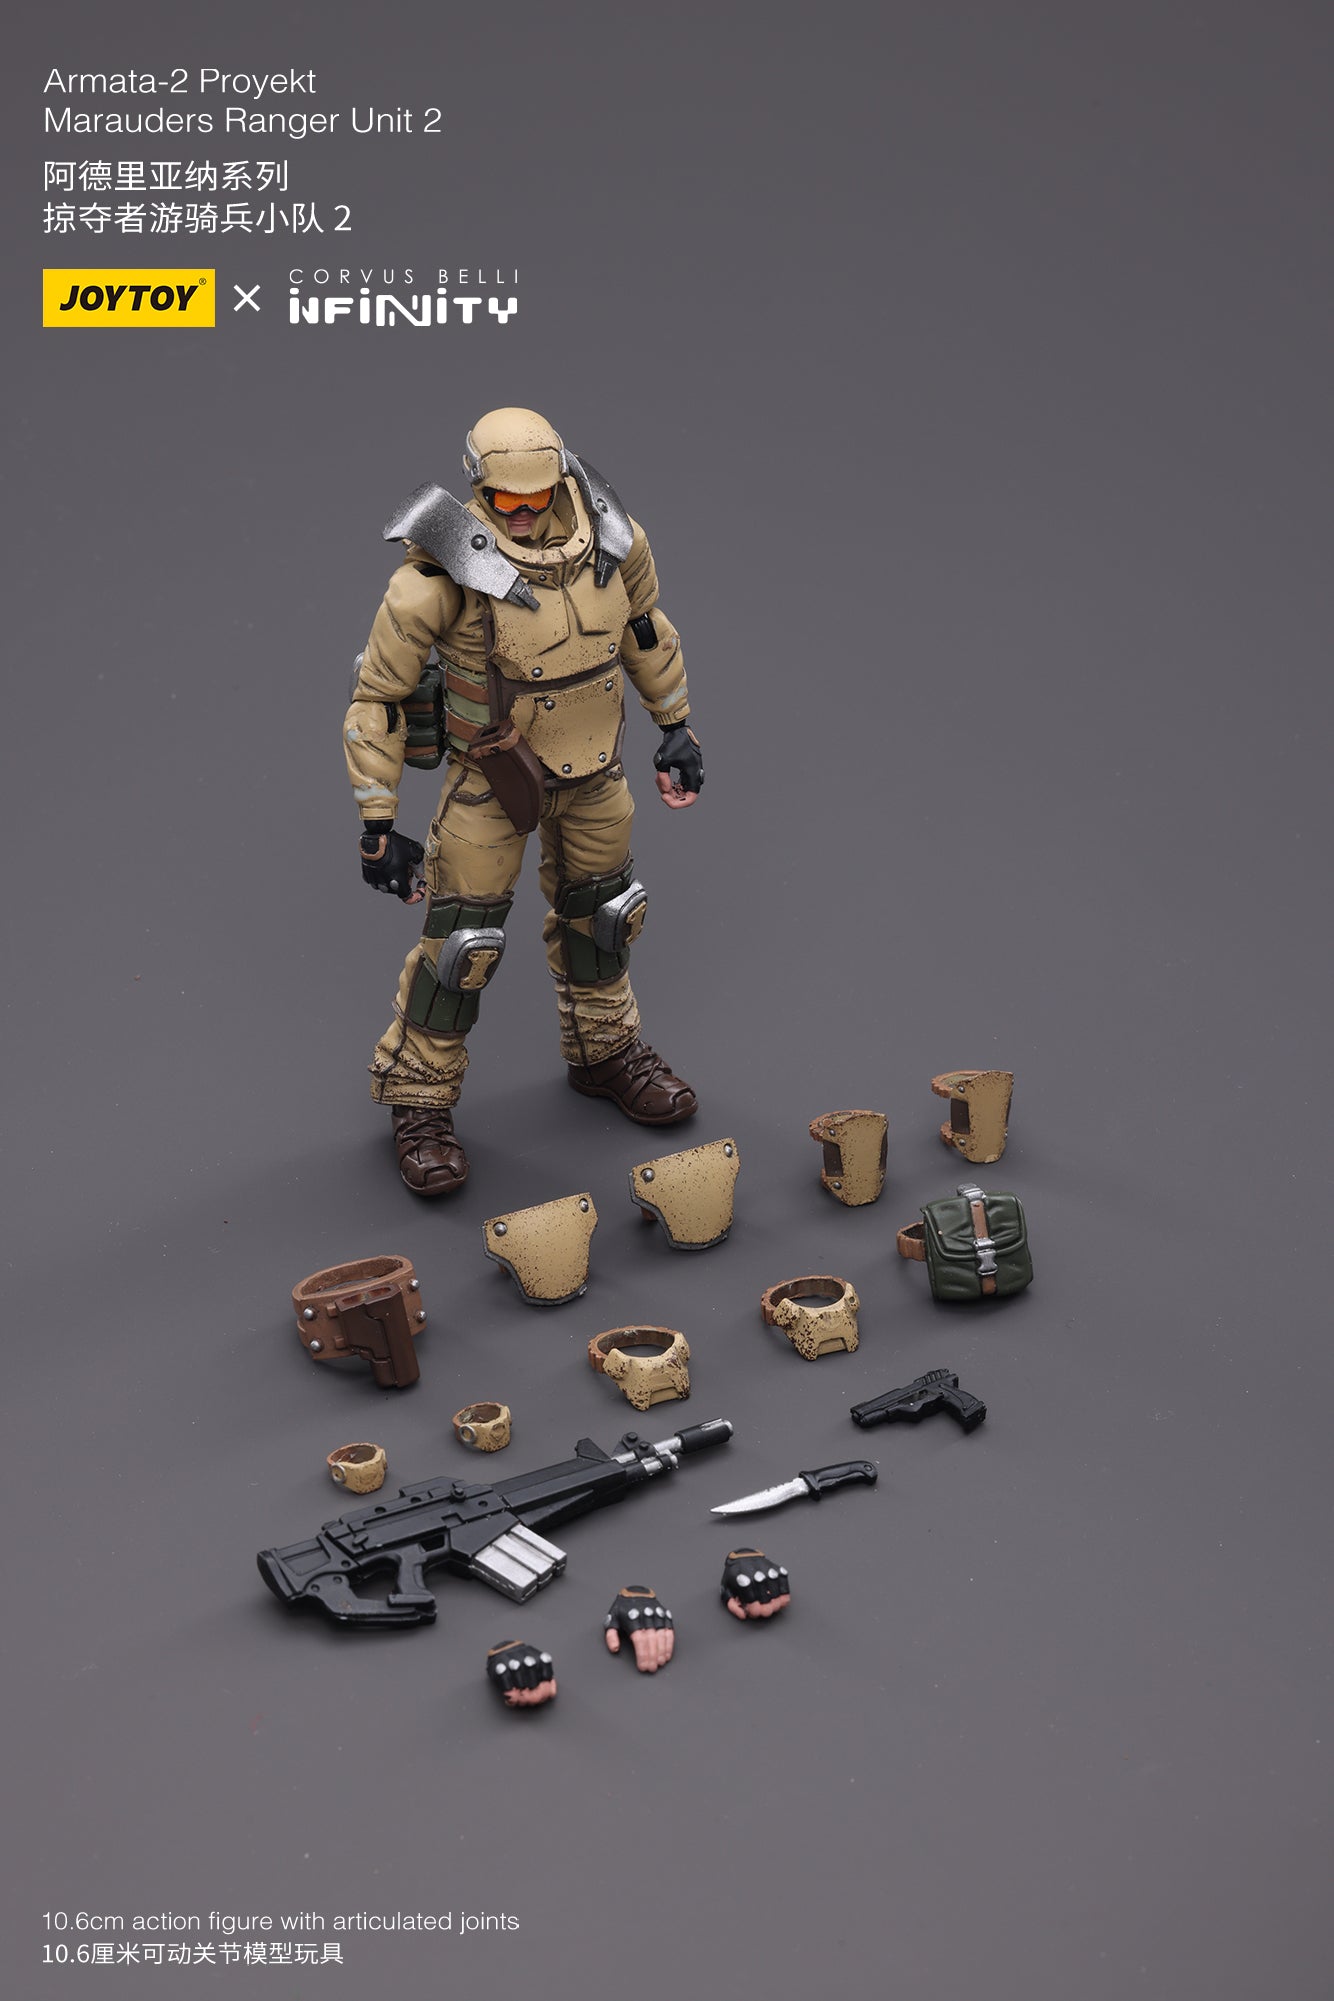 Armata-2 Proyekt Marauders Ranger Unit 2- Action Figure By JOYTOY